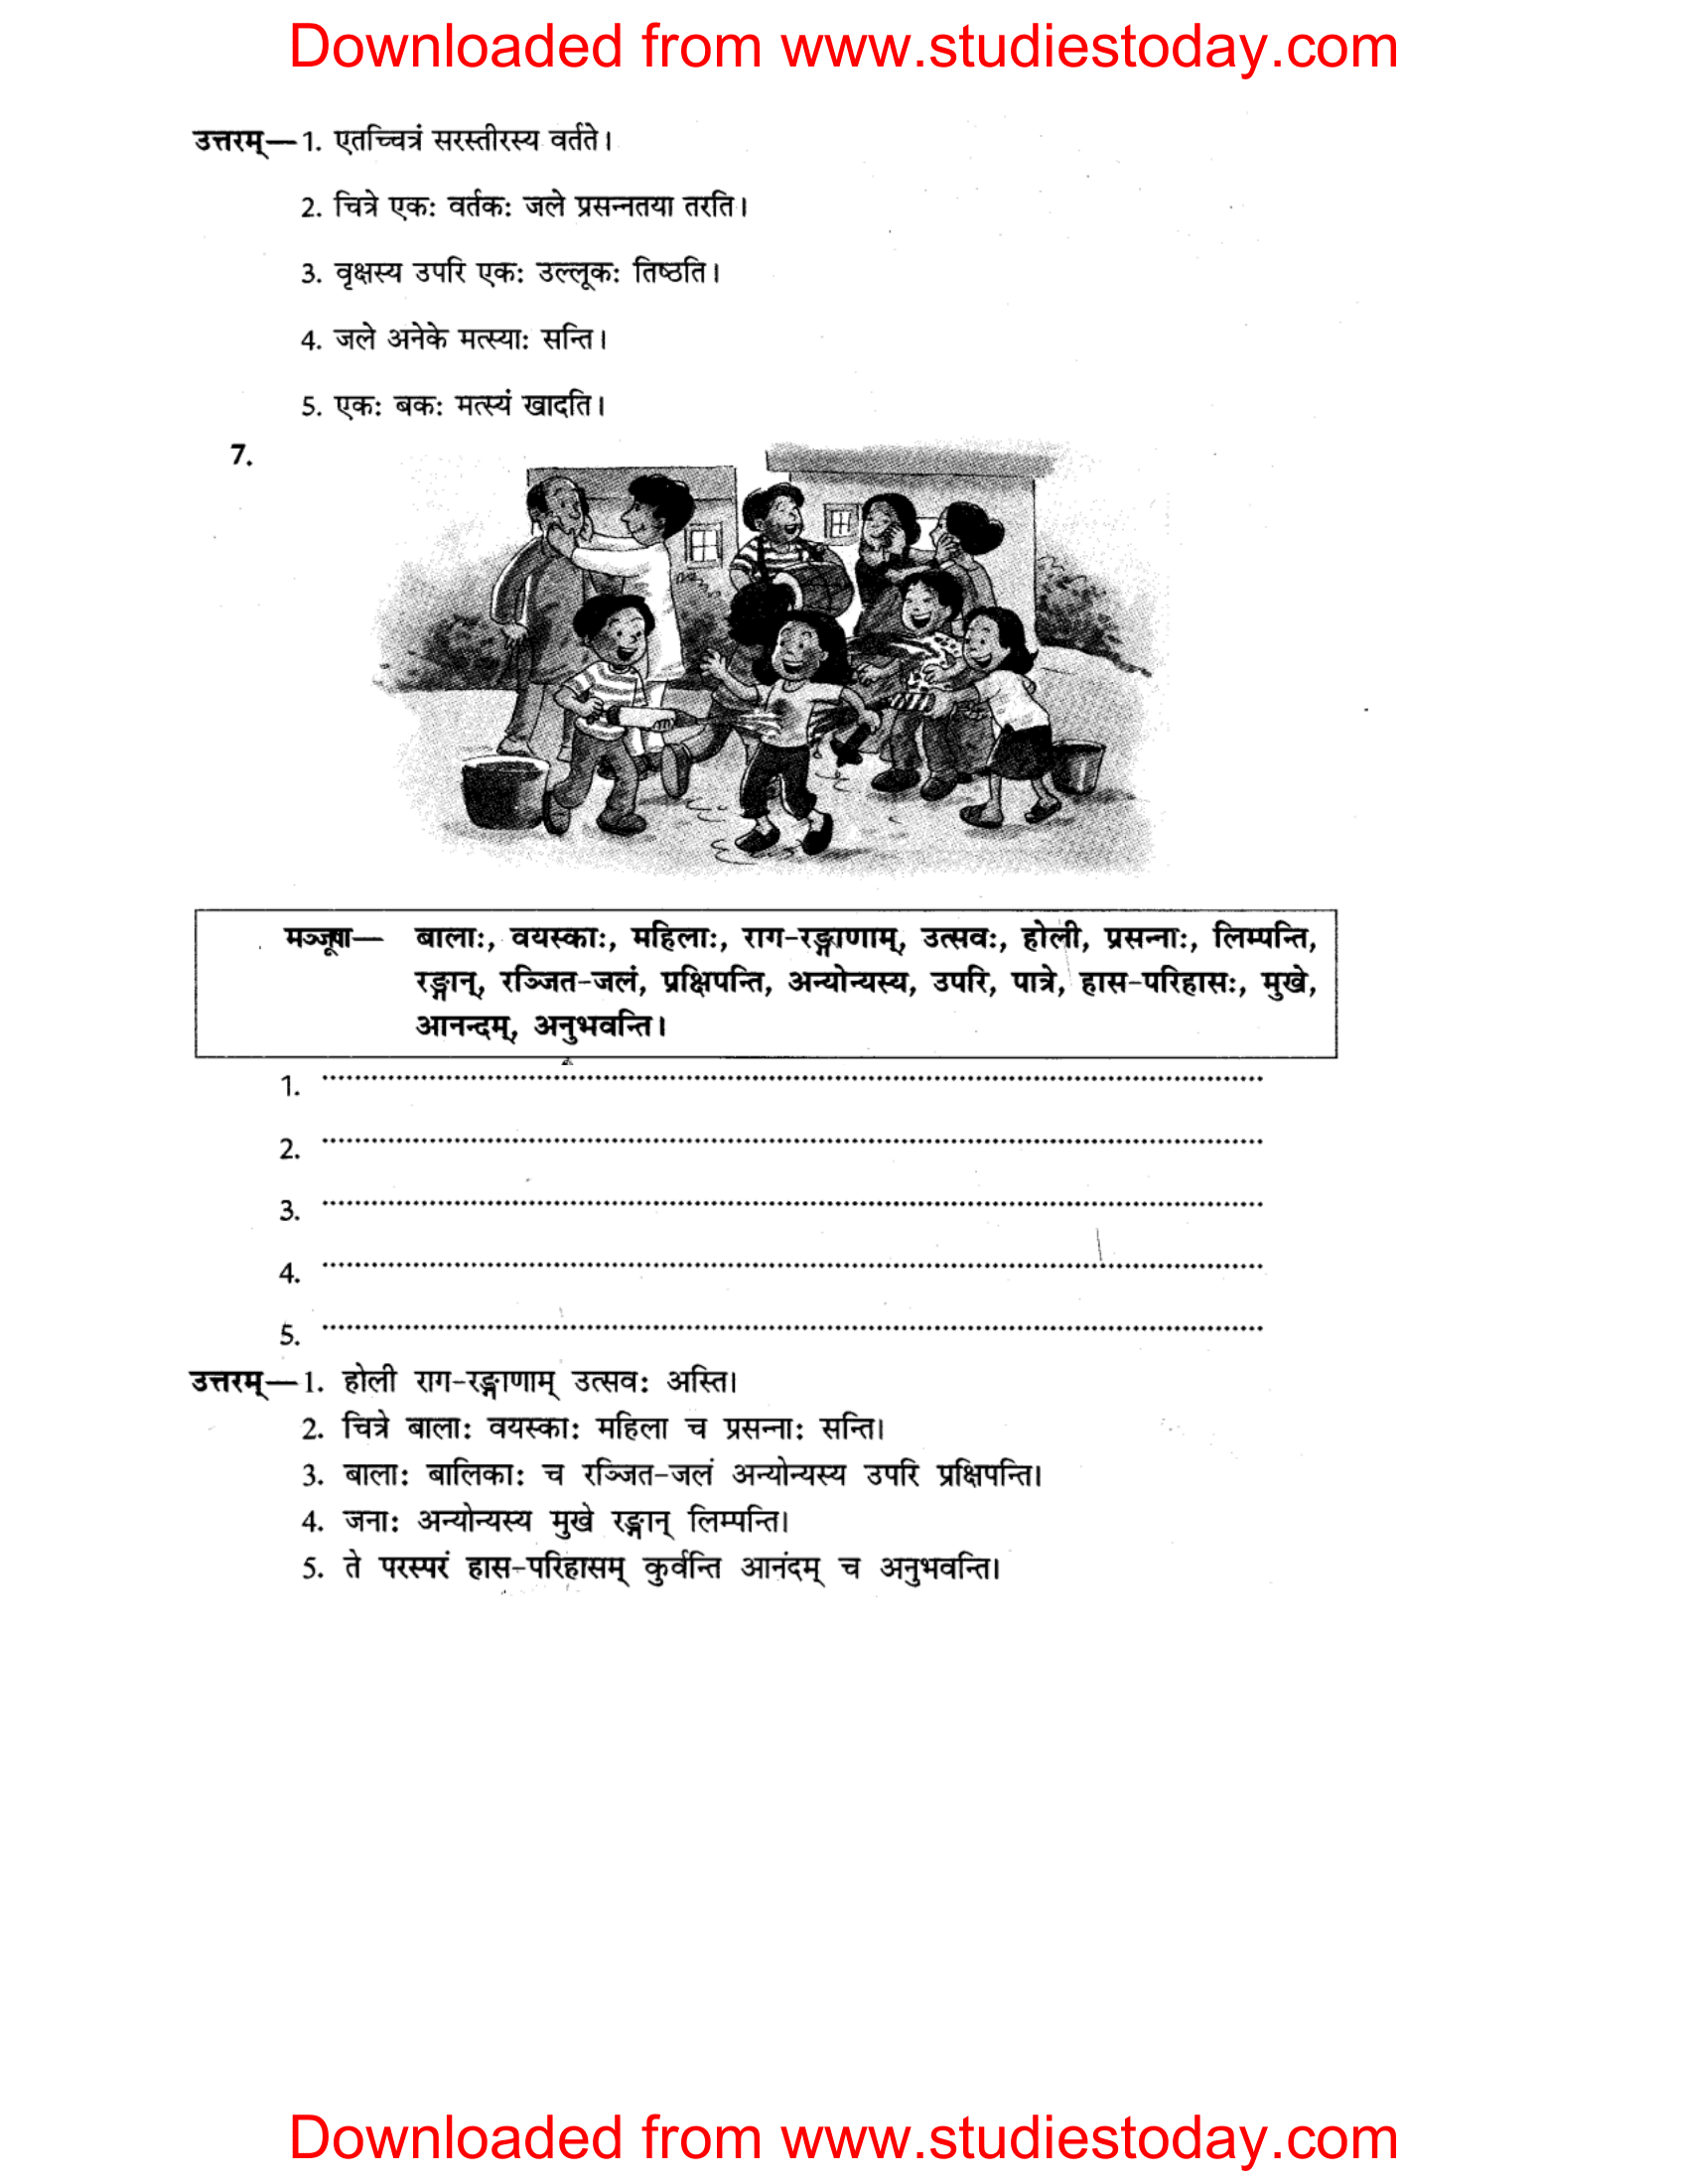 ncert-solutions-class-8-sanskrit-chapter-11-chitravarnan-5